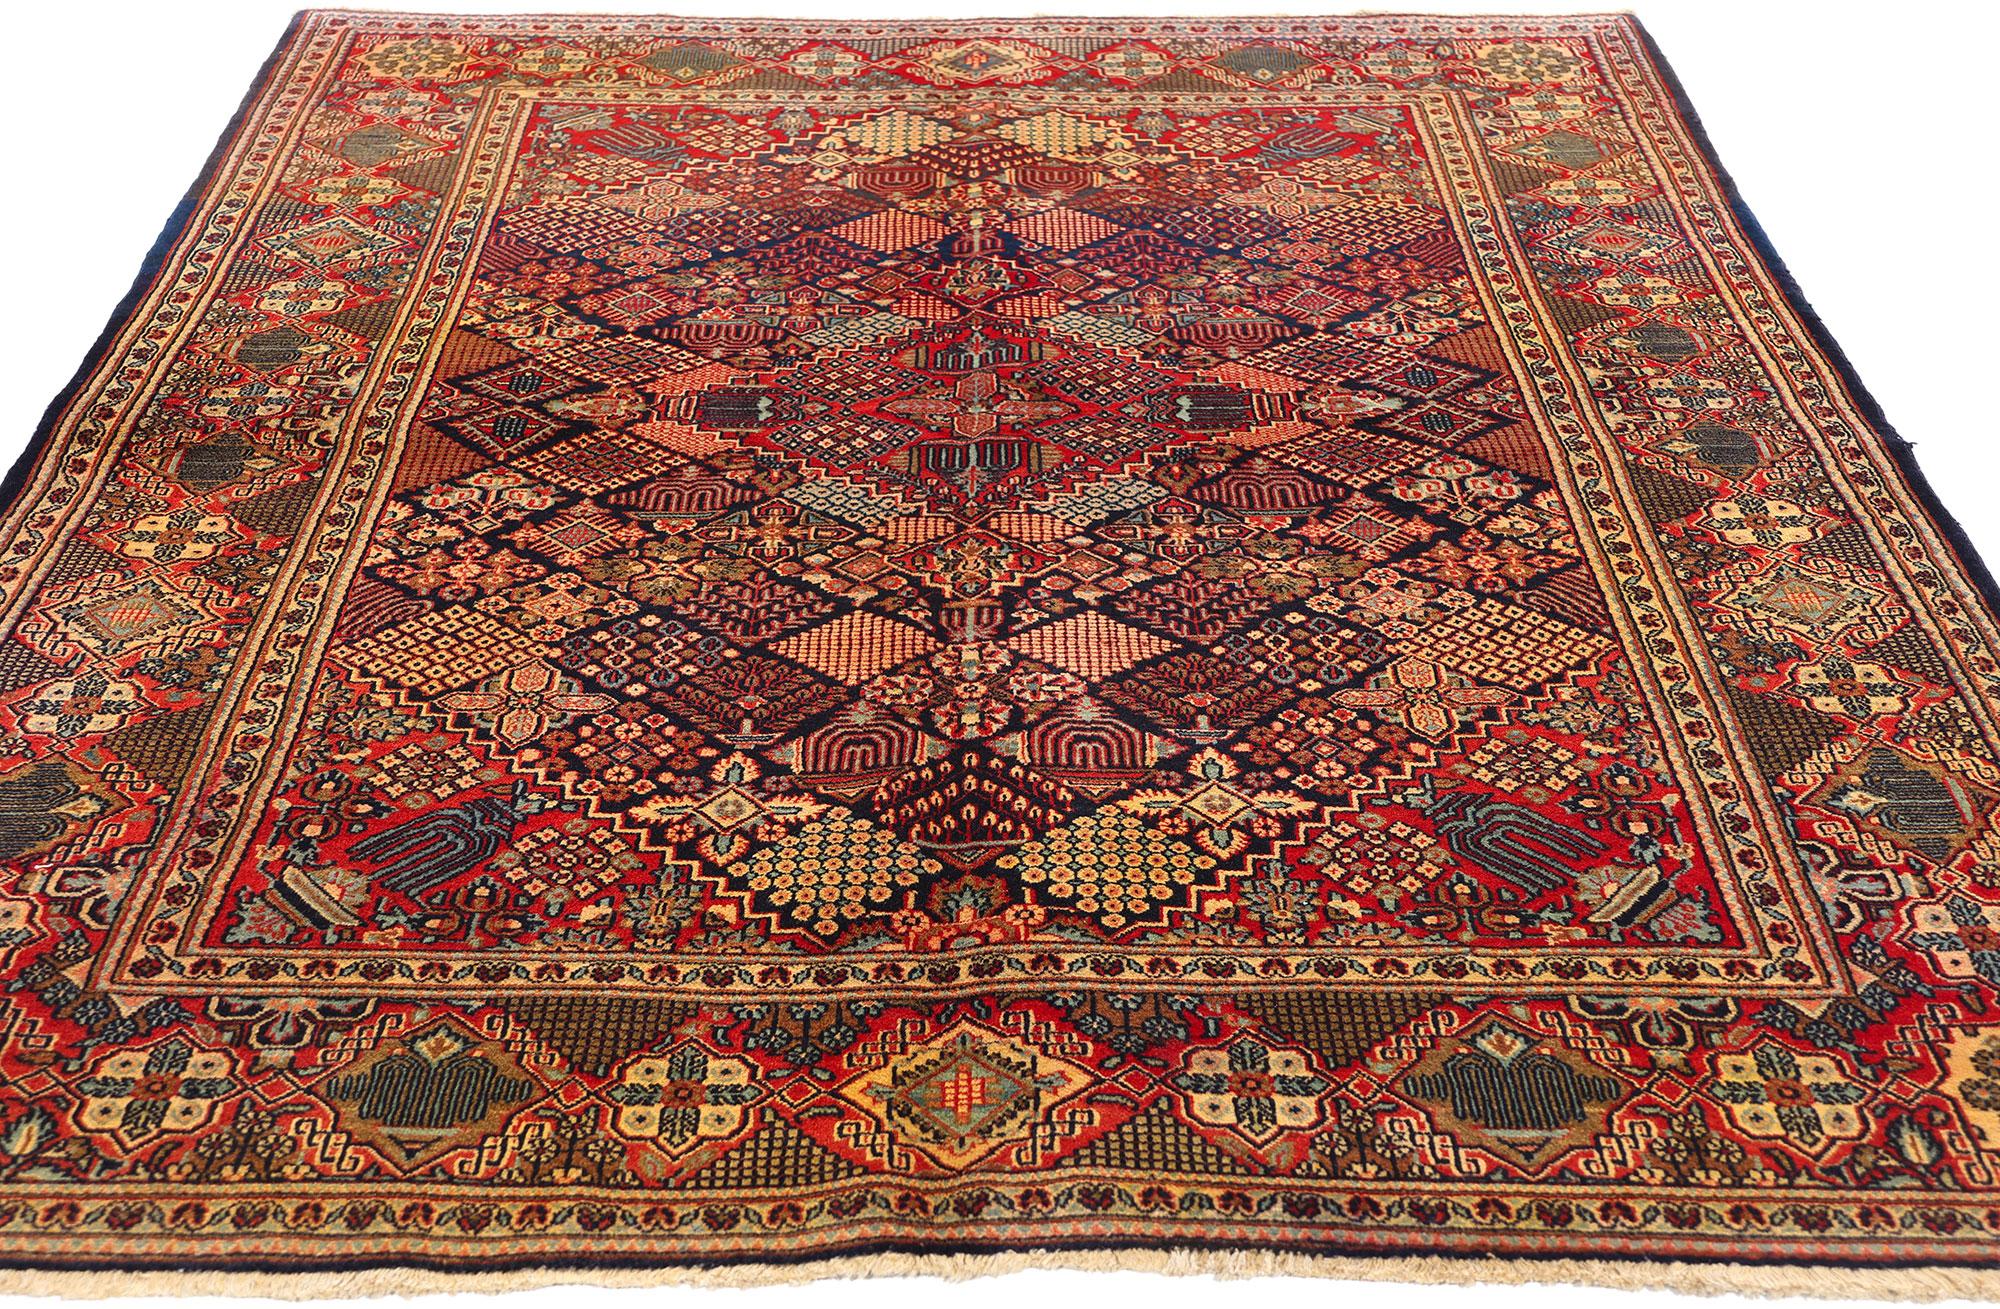 Antique Persian Kashan Rug with Joshegan Diamond Design and Jewel-Tone Colors For Sale 7